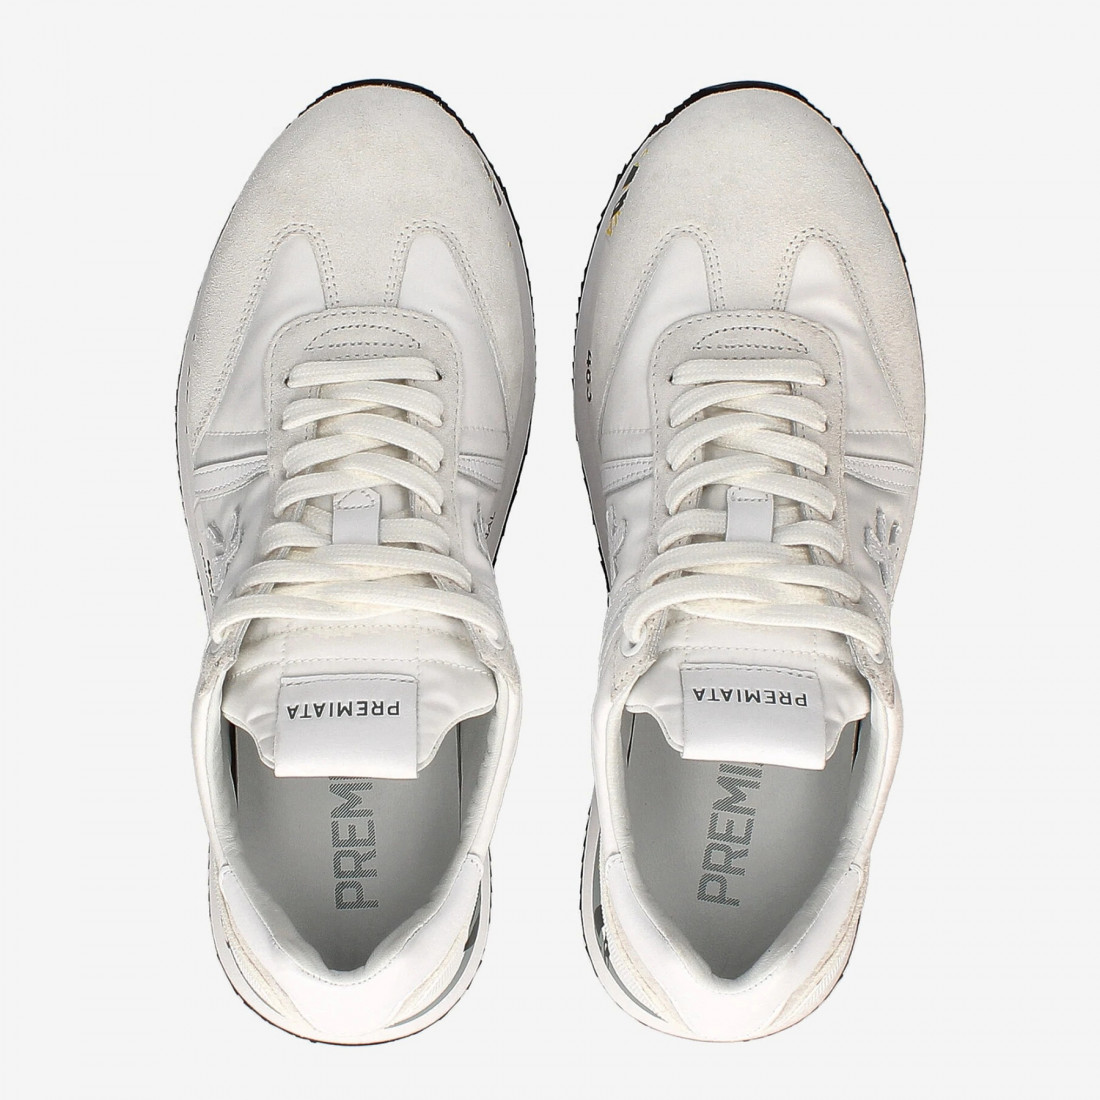 Premiata Conny 5617 white suede and fabric sneaker